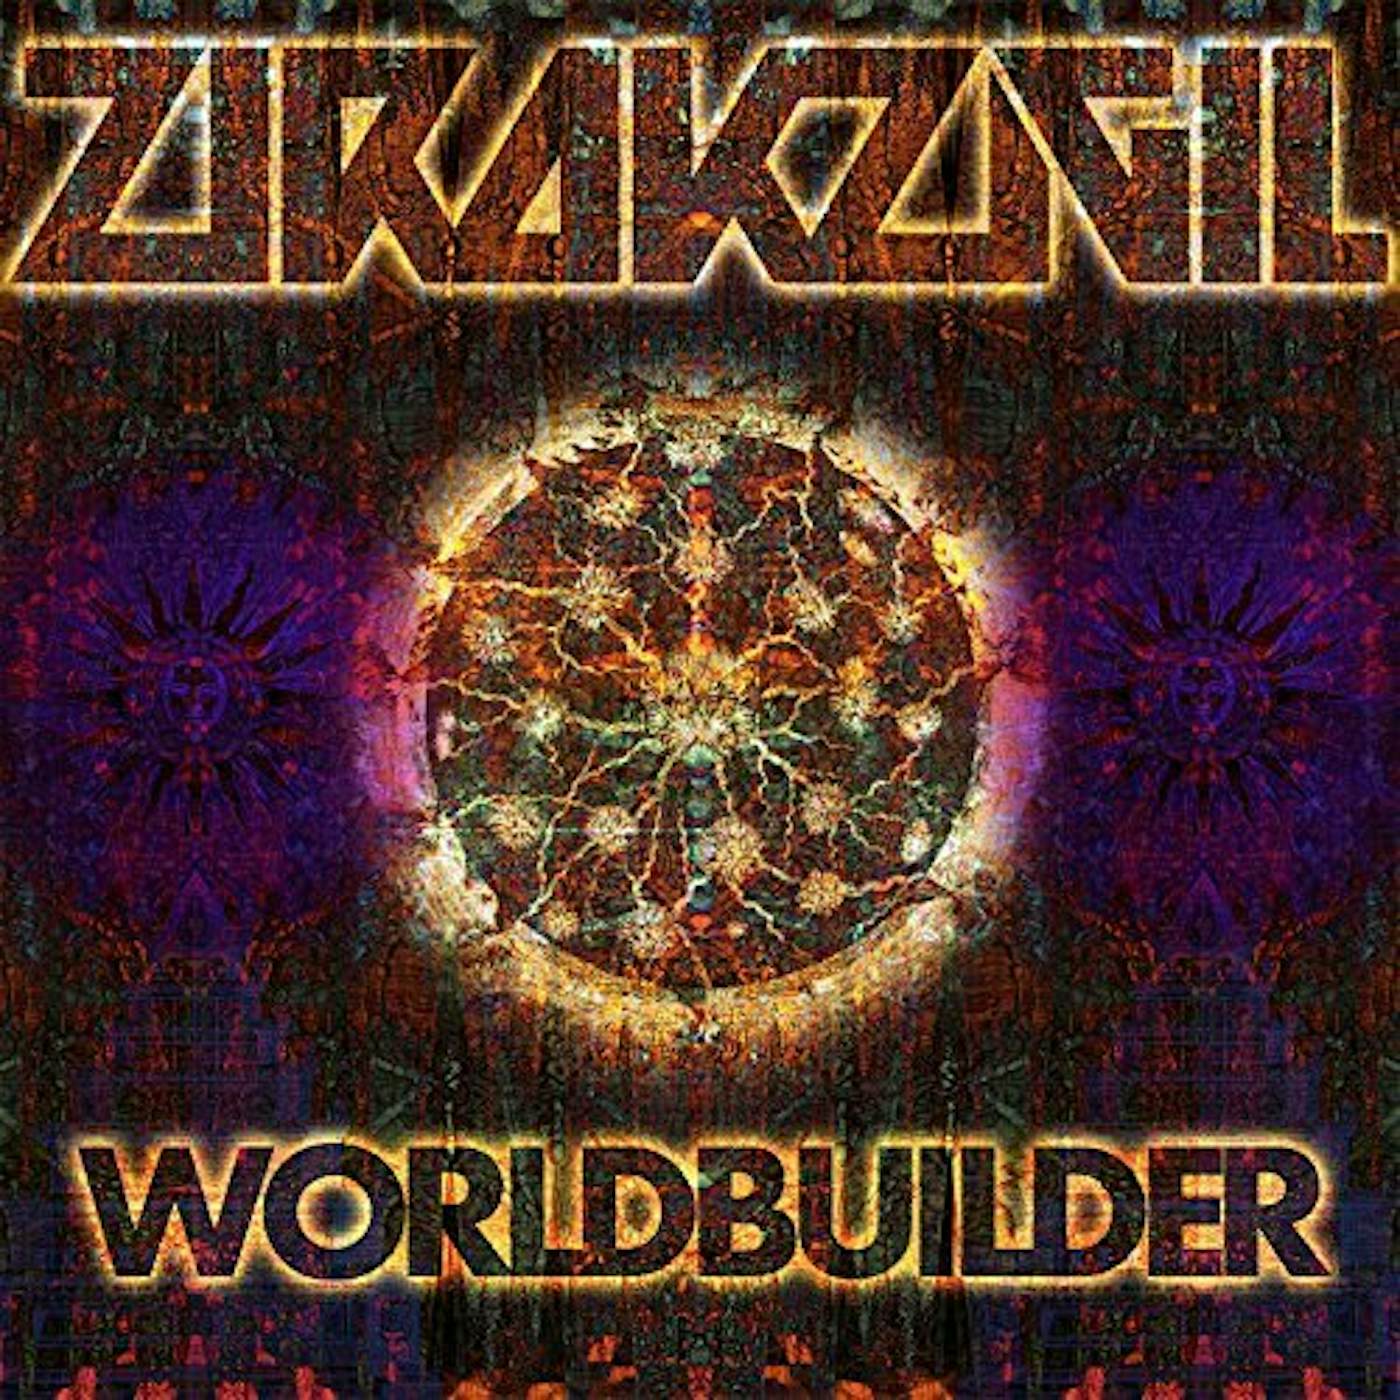 Zirakzigil Worldbuilder Vinyl Record